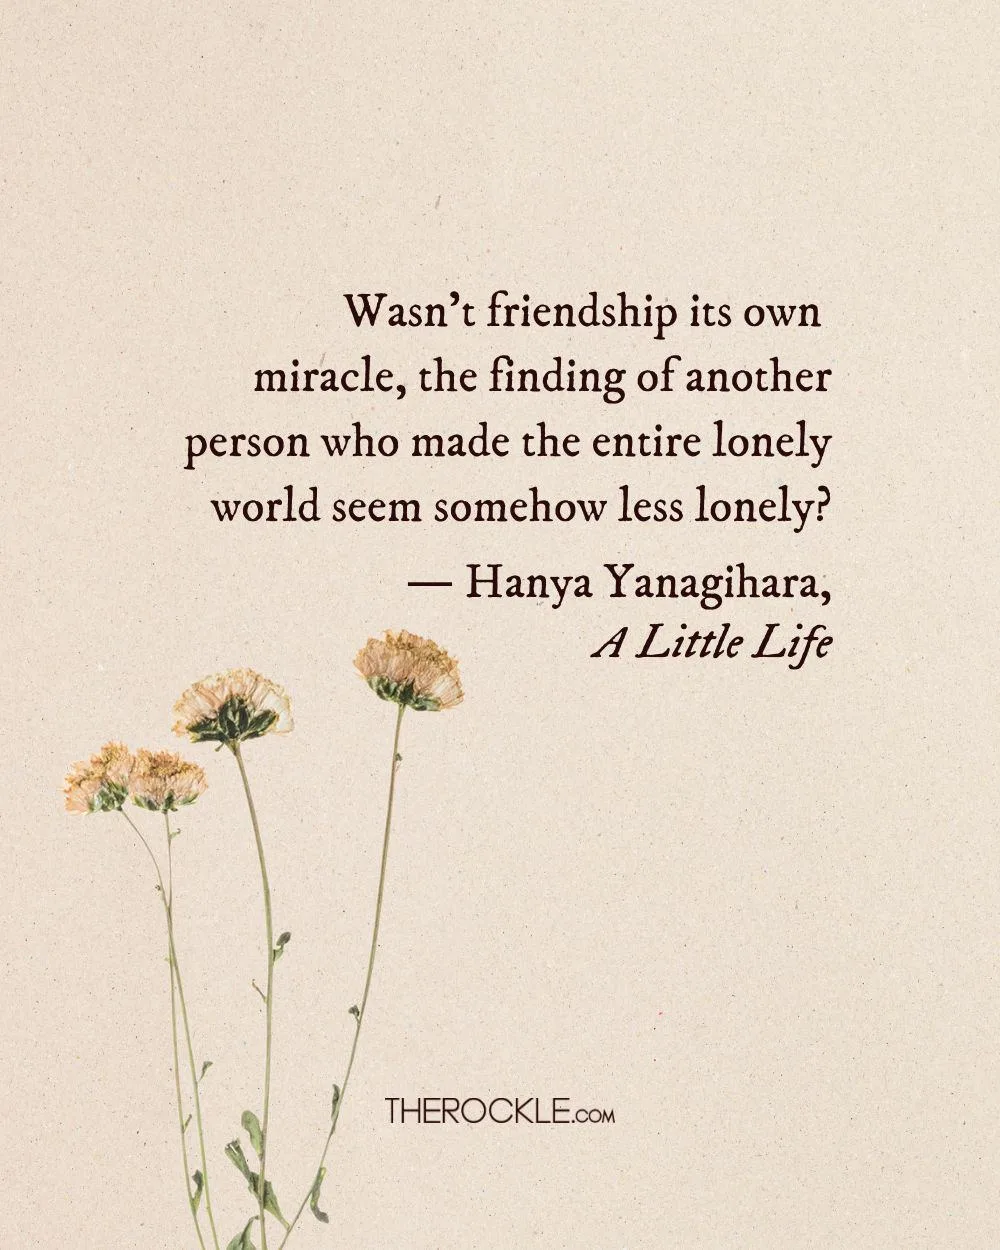 Hanya Yanagihara on friendship as a source of comfort